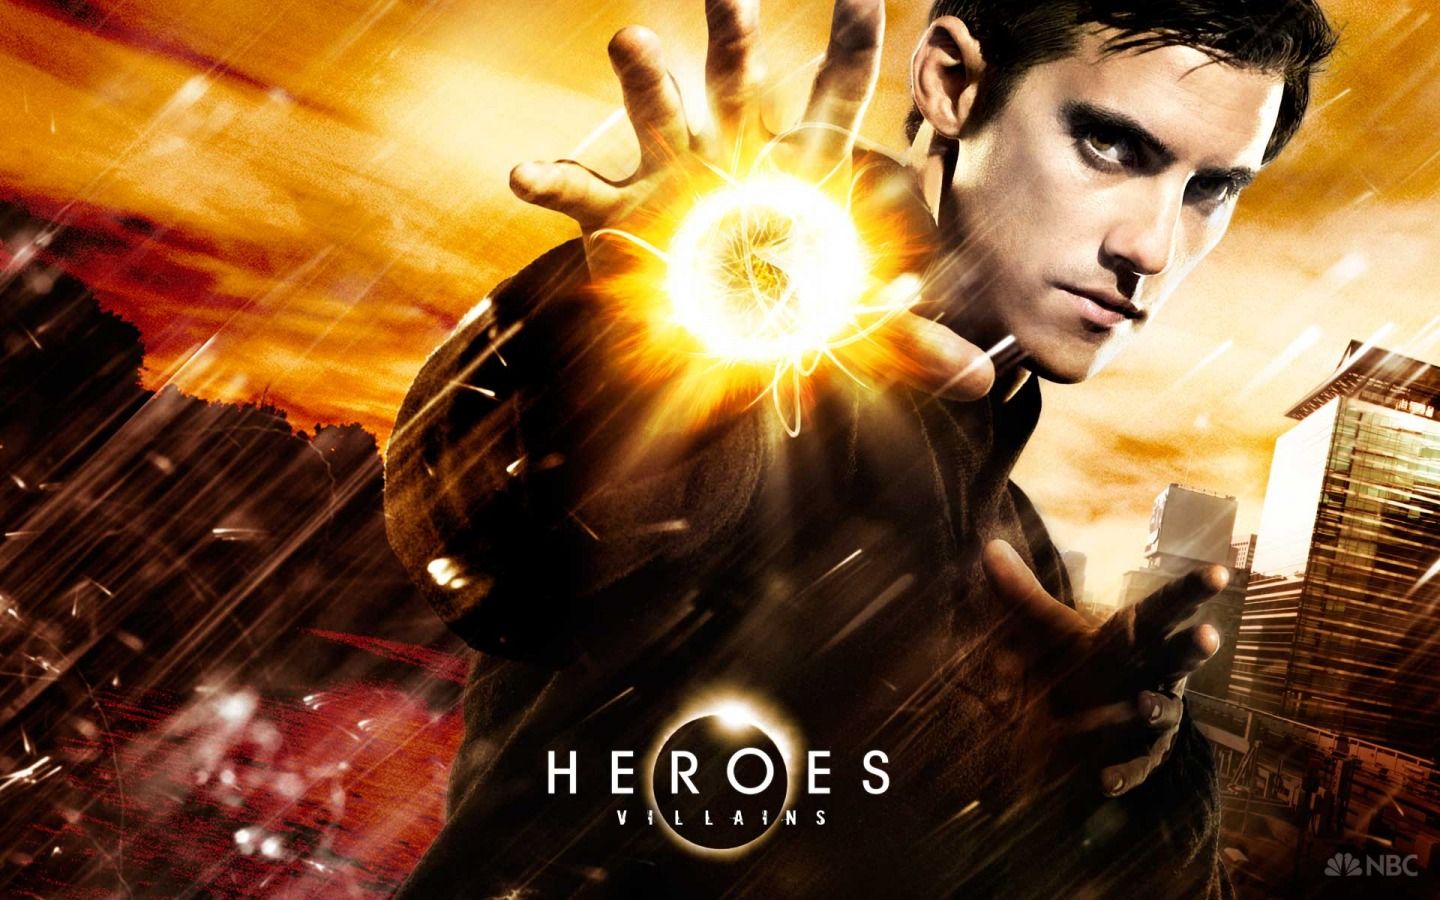 Heroes Villains Wallpaper Heroes Movies Wallpaper in jpg format for free download